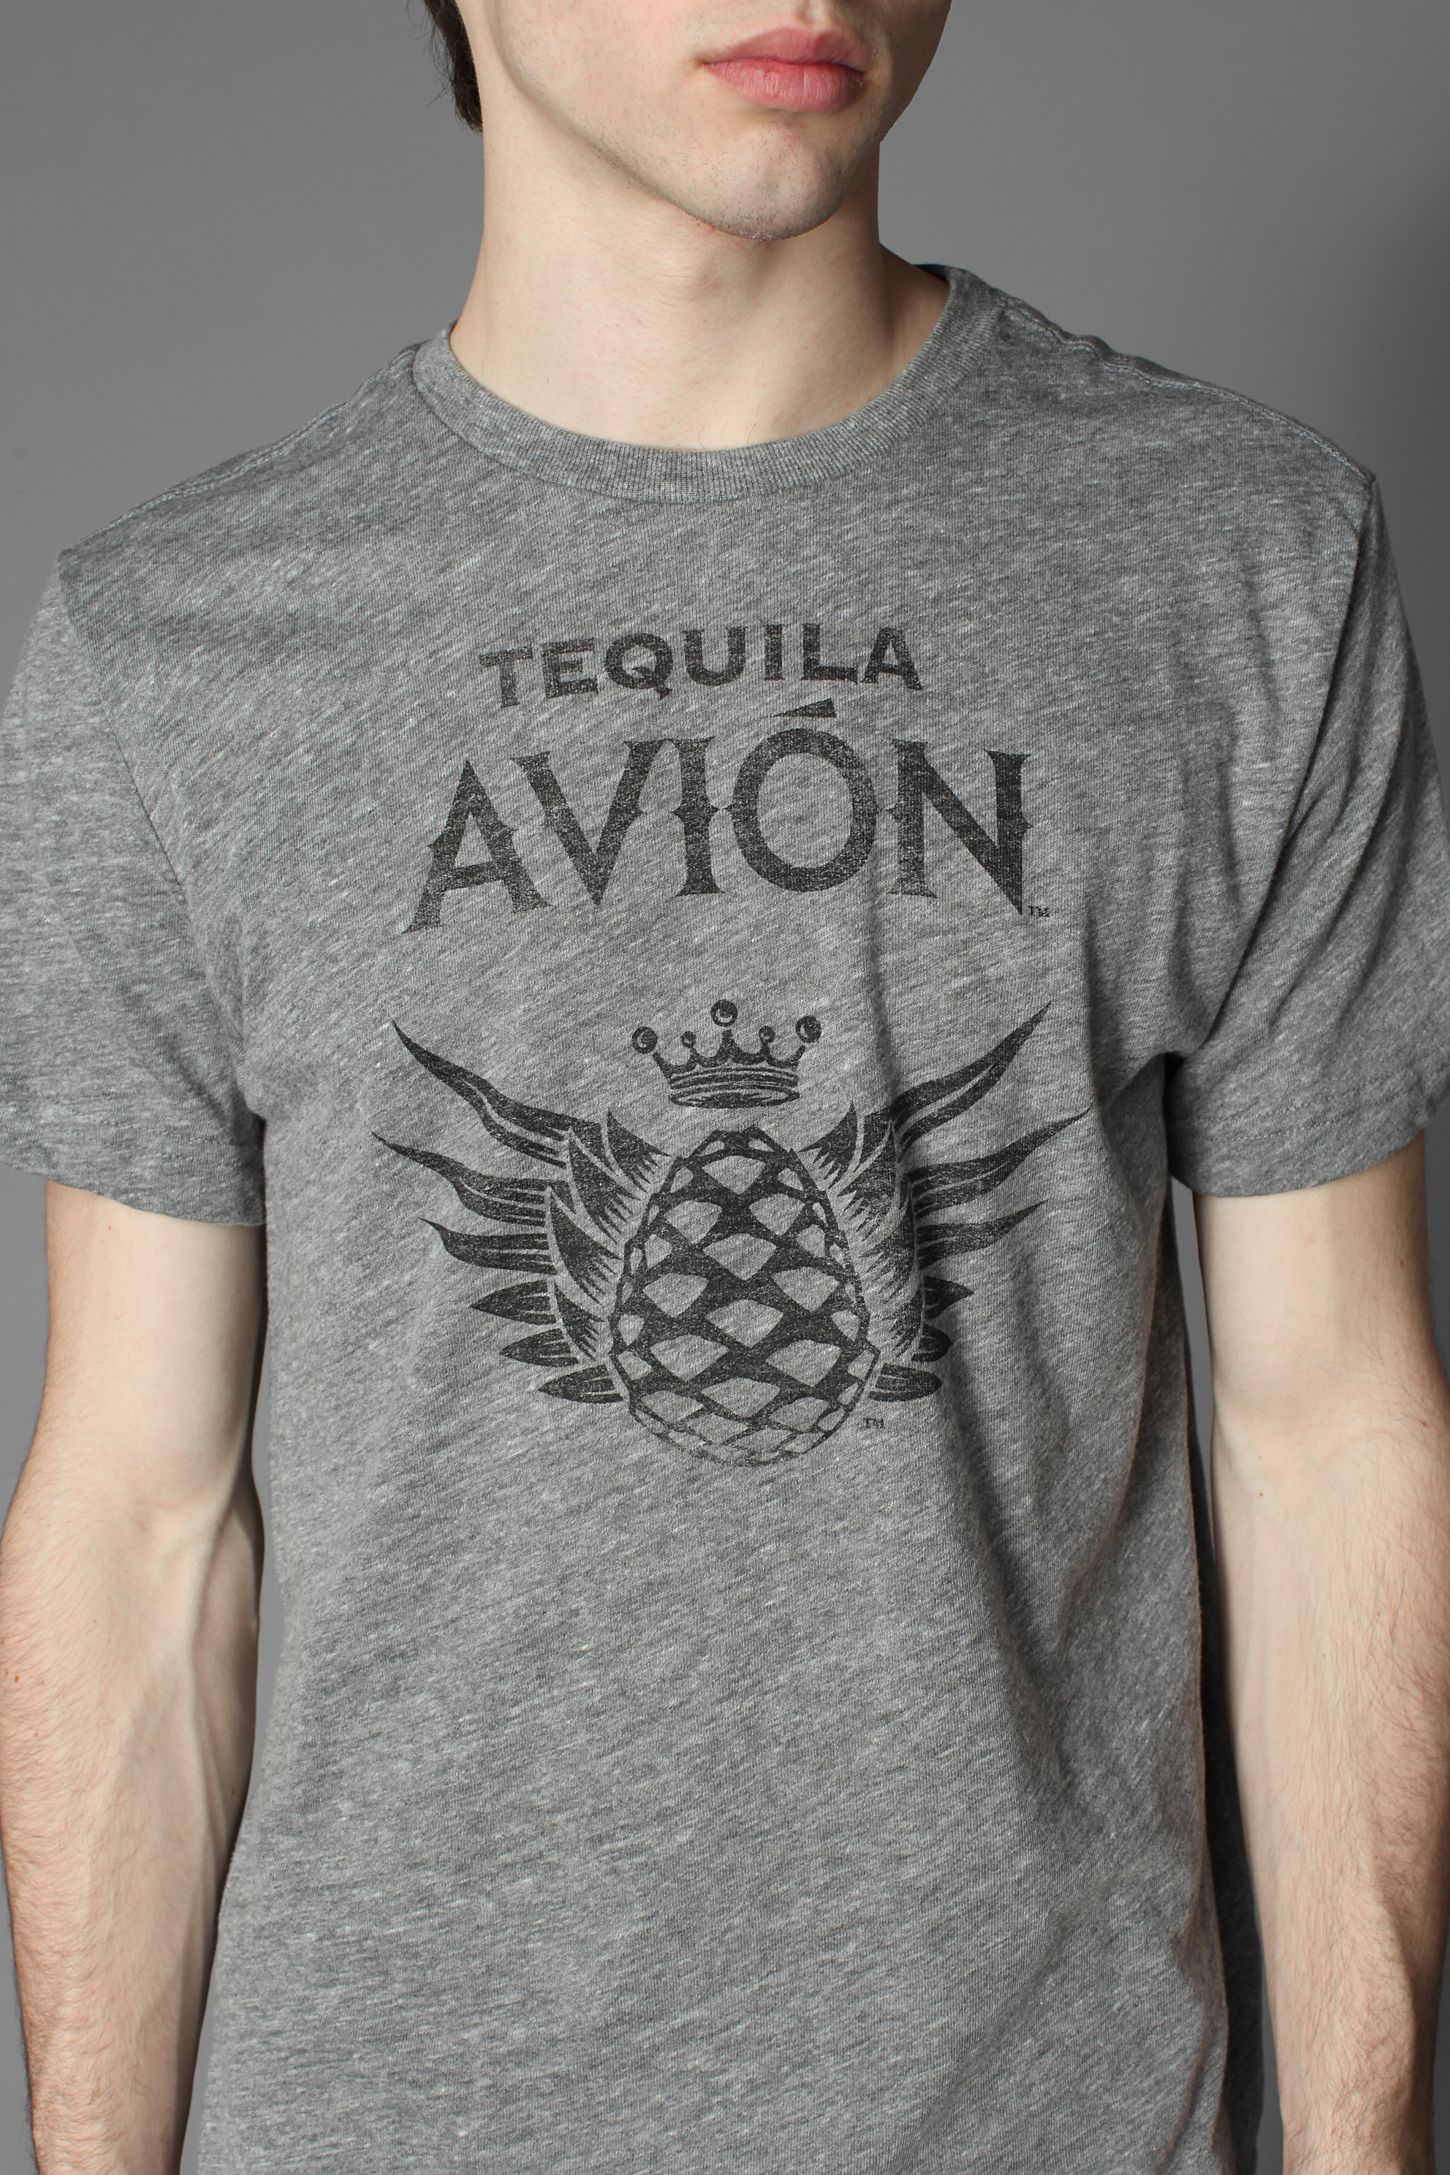 Avion Tequila entourage T Shirt